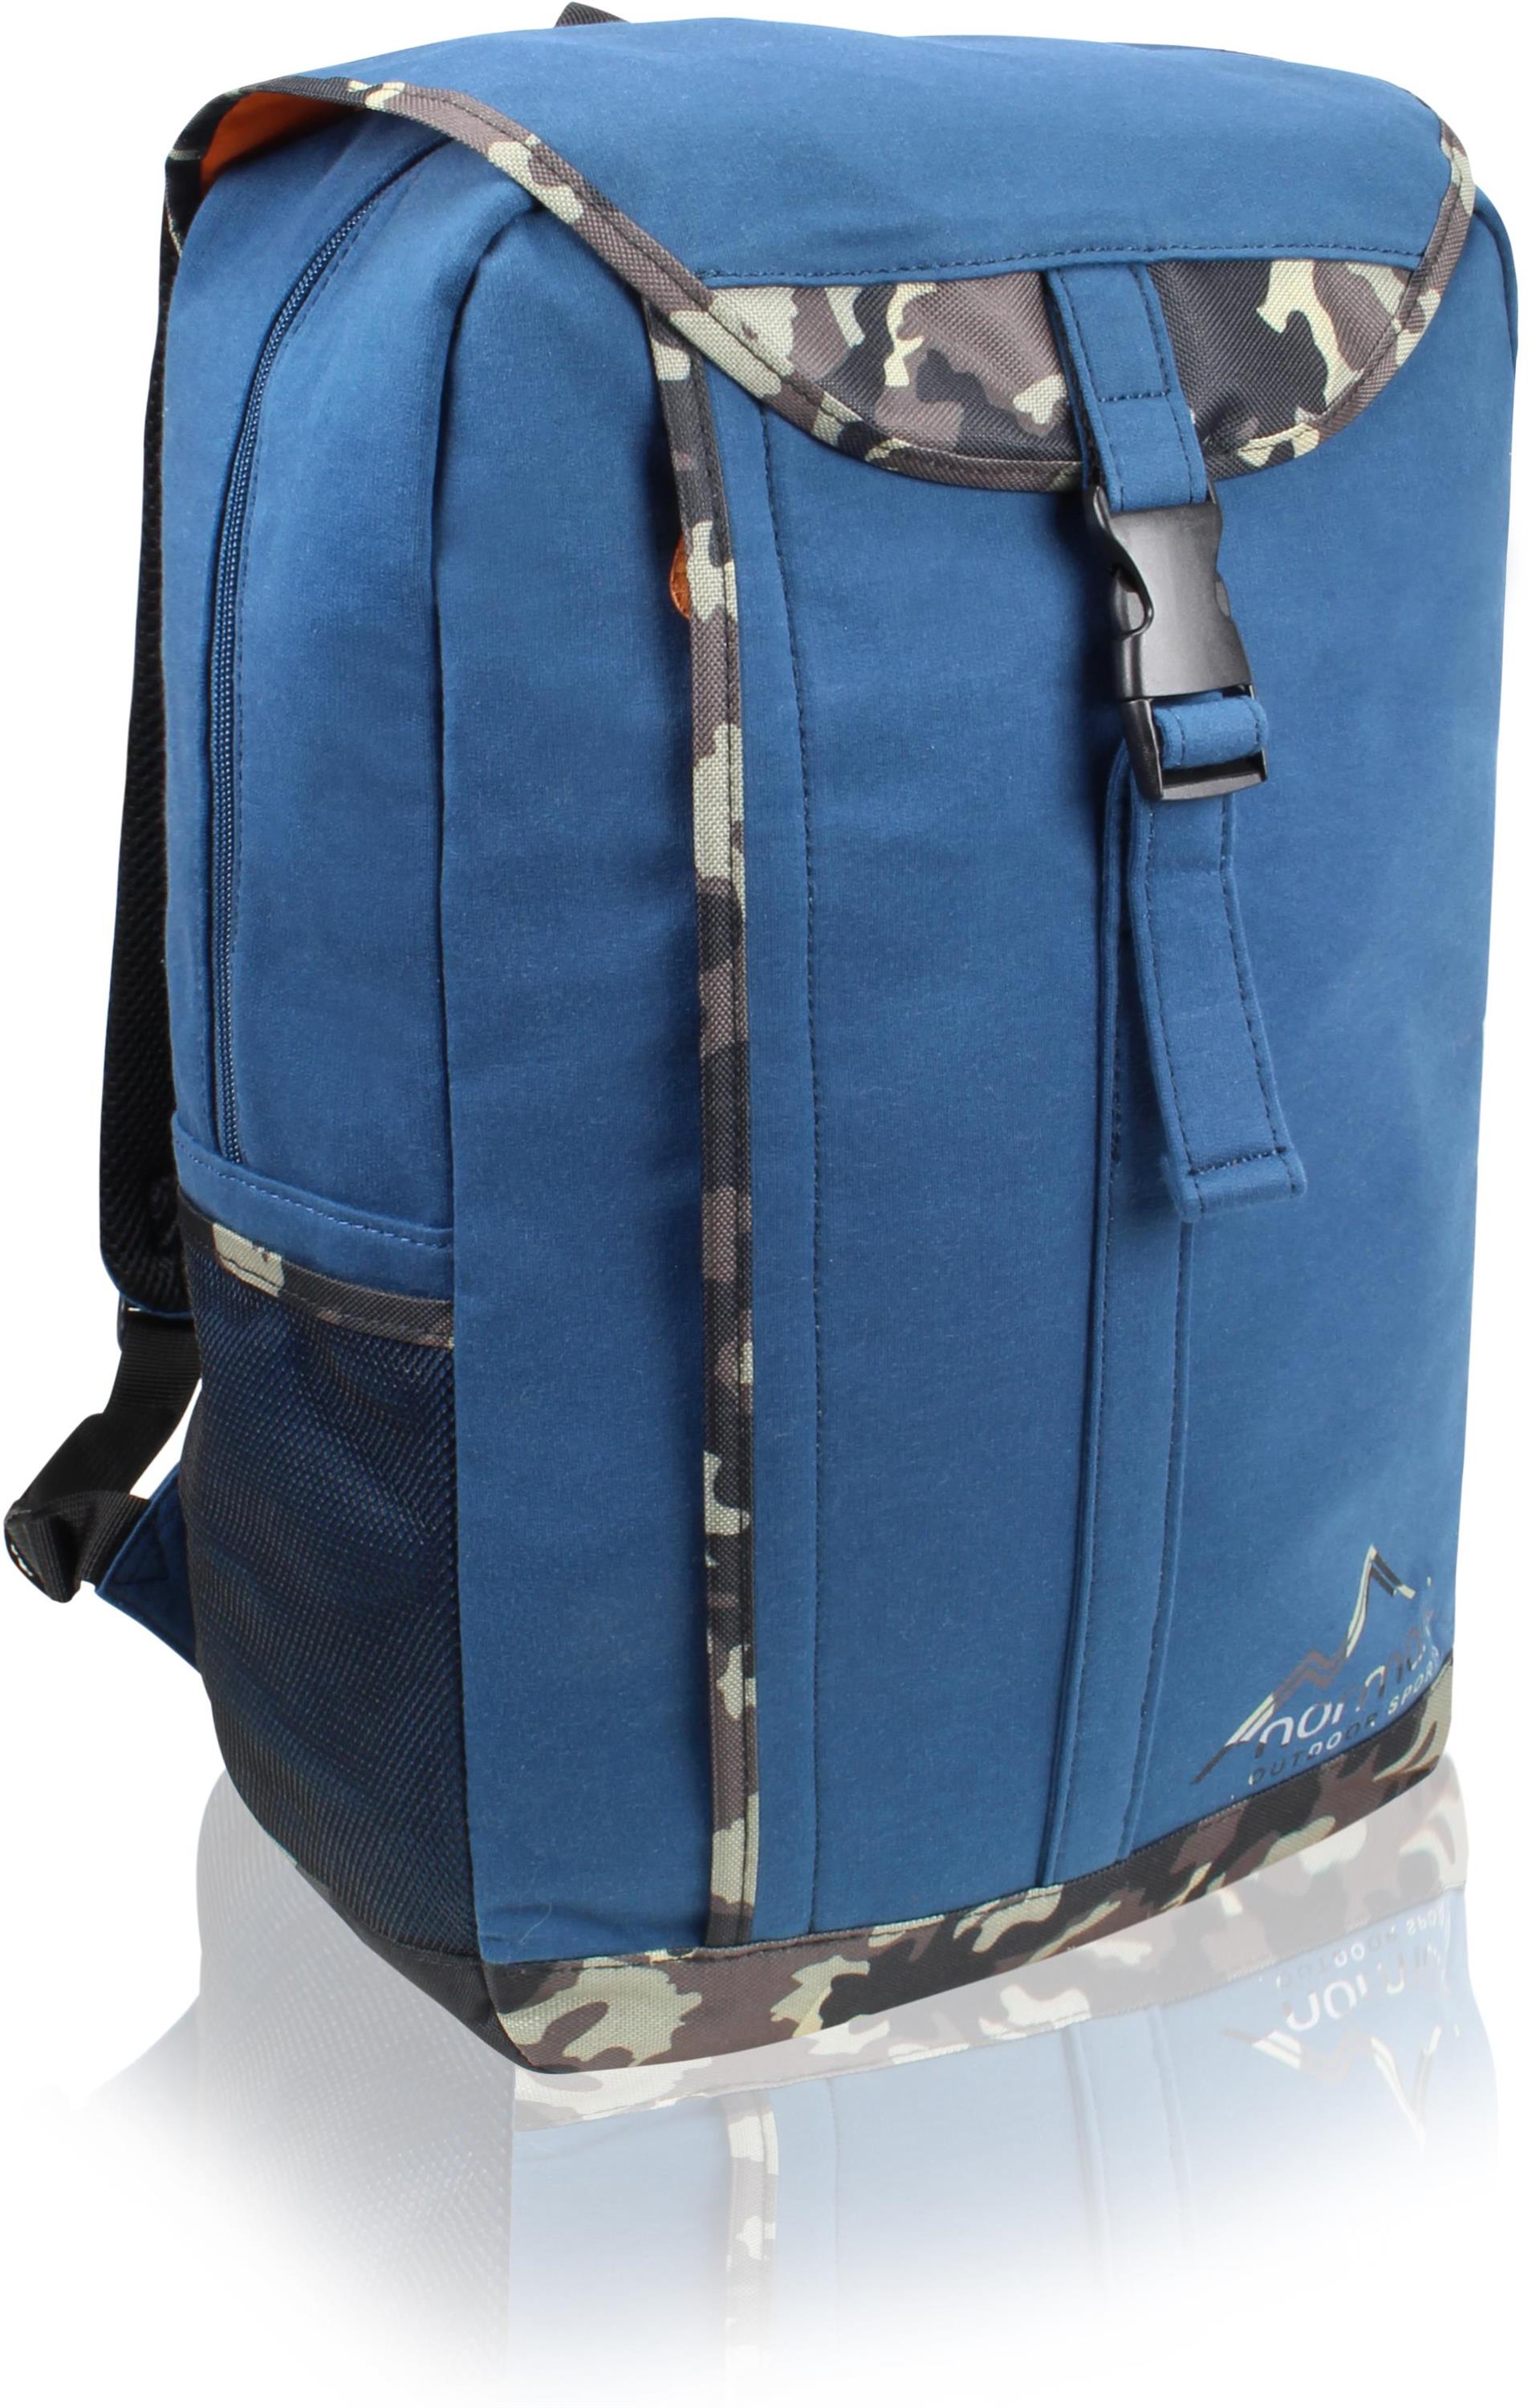 Рюкзак Normani Outdoor Sports Freshman, синий рюкзак freshman normani outdoor sports цвет rot